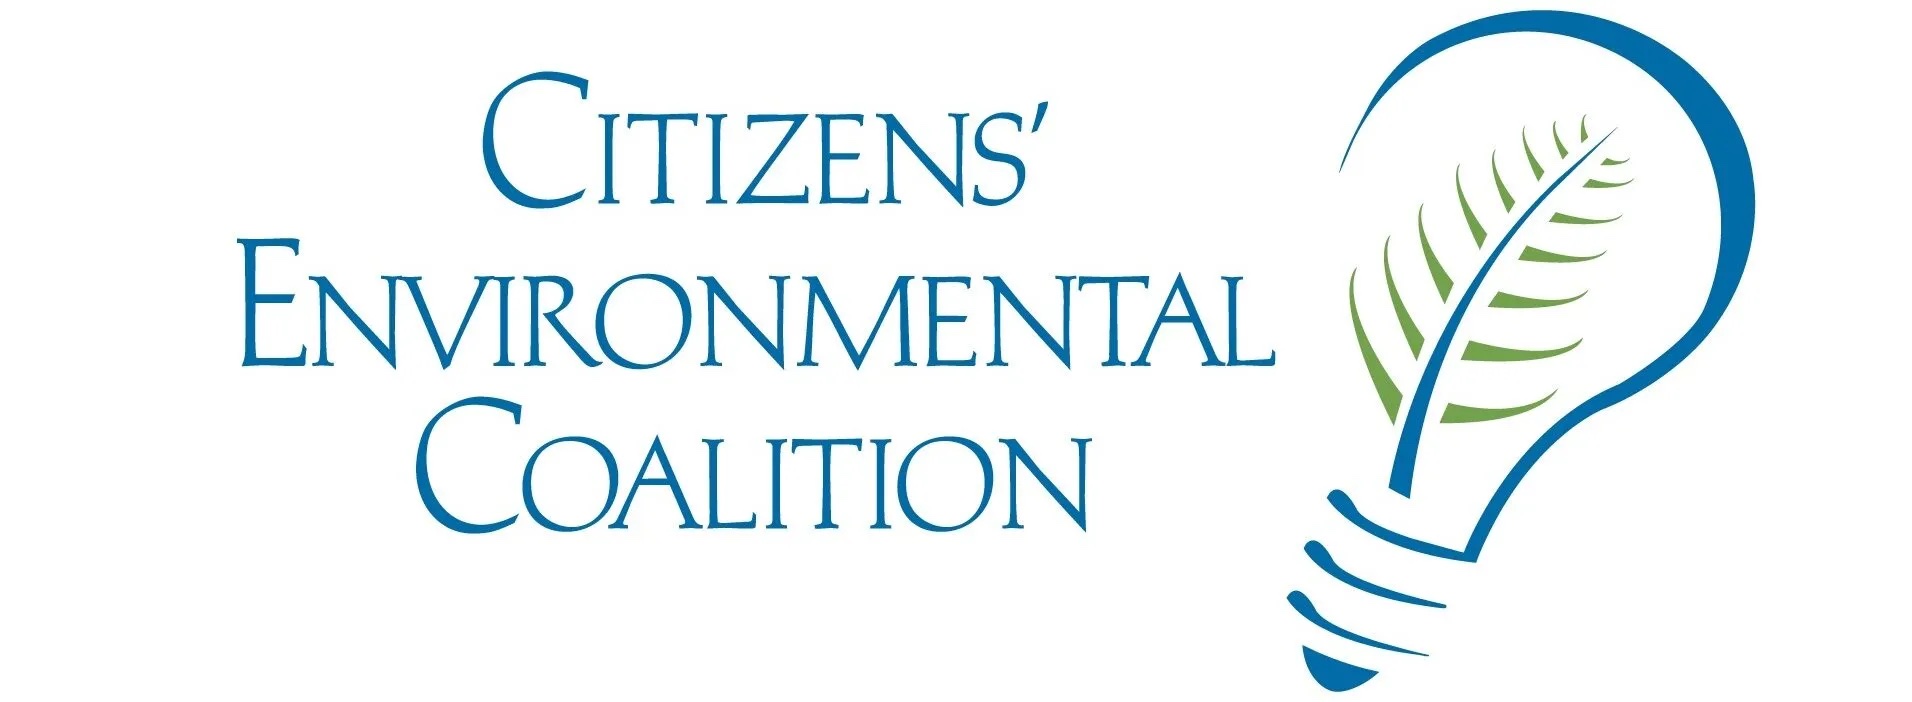 Citizens Environmental Coalition Books on the Bayou